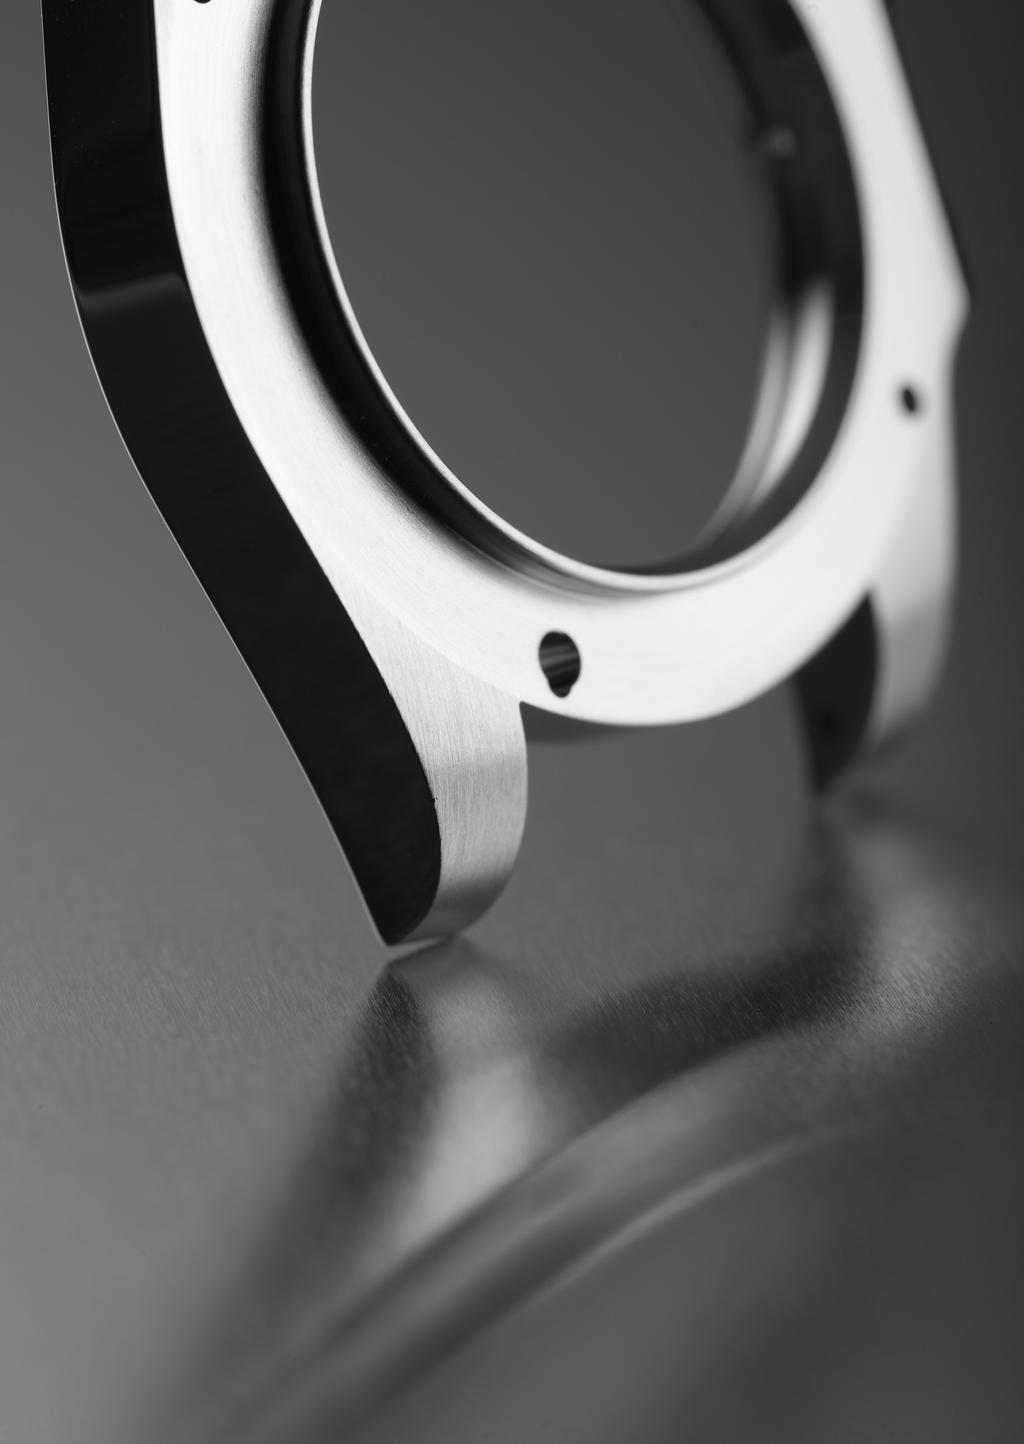 Características acero inoxidable 904l Rolex utiliza acero inoxidable 904L para las cajas de acero de sus relojes.